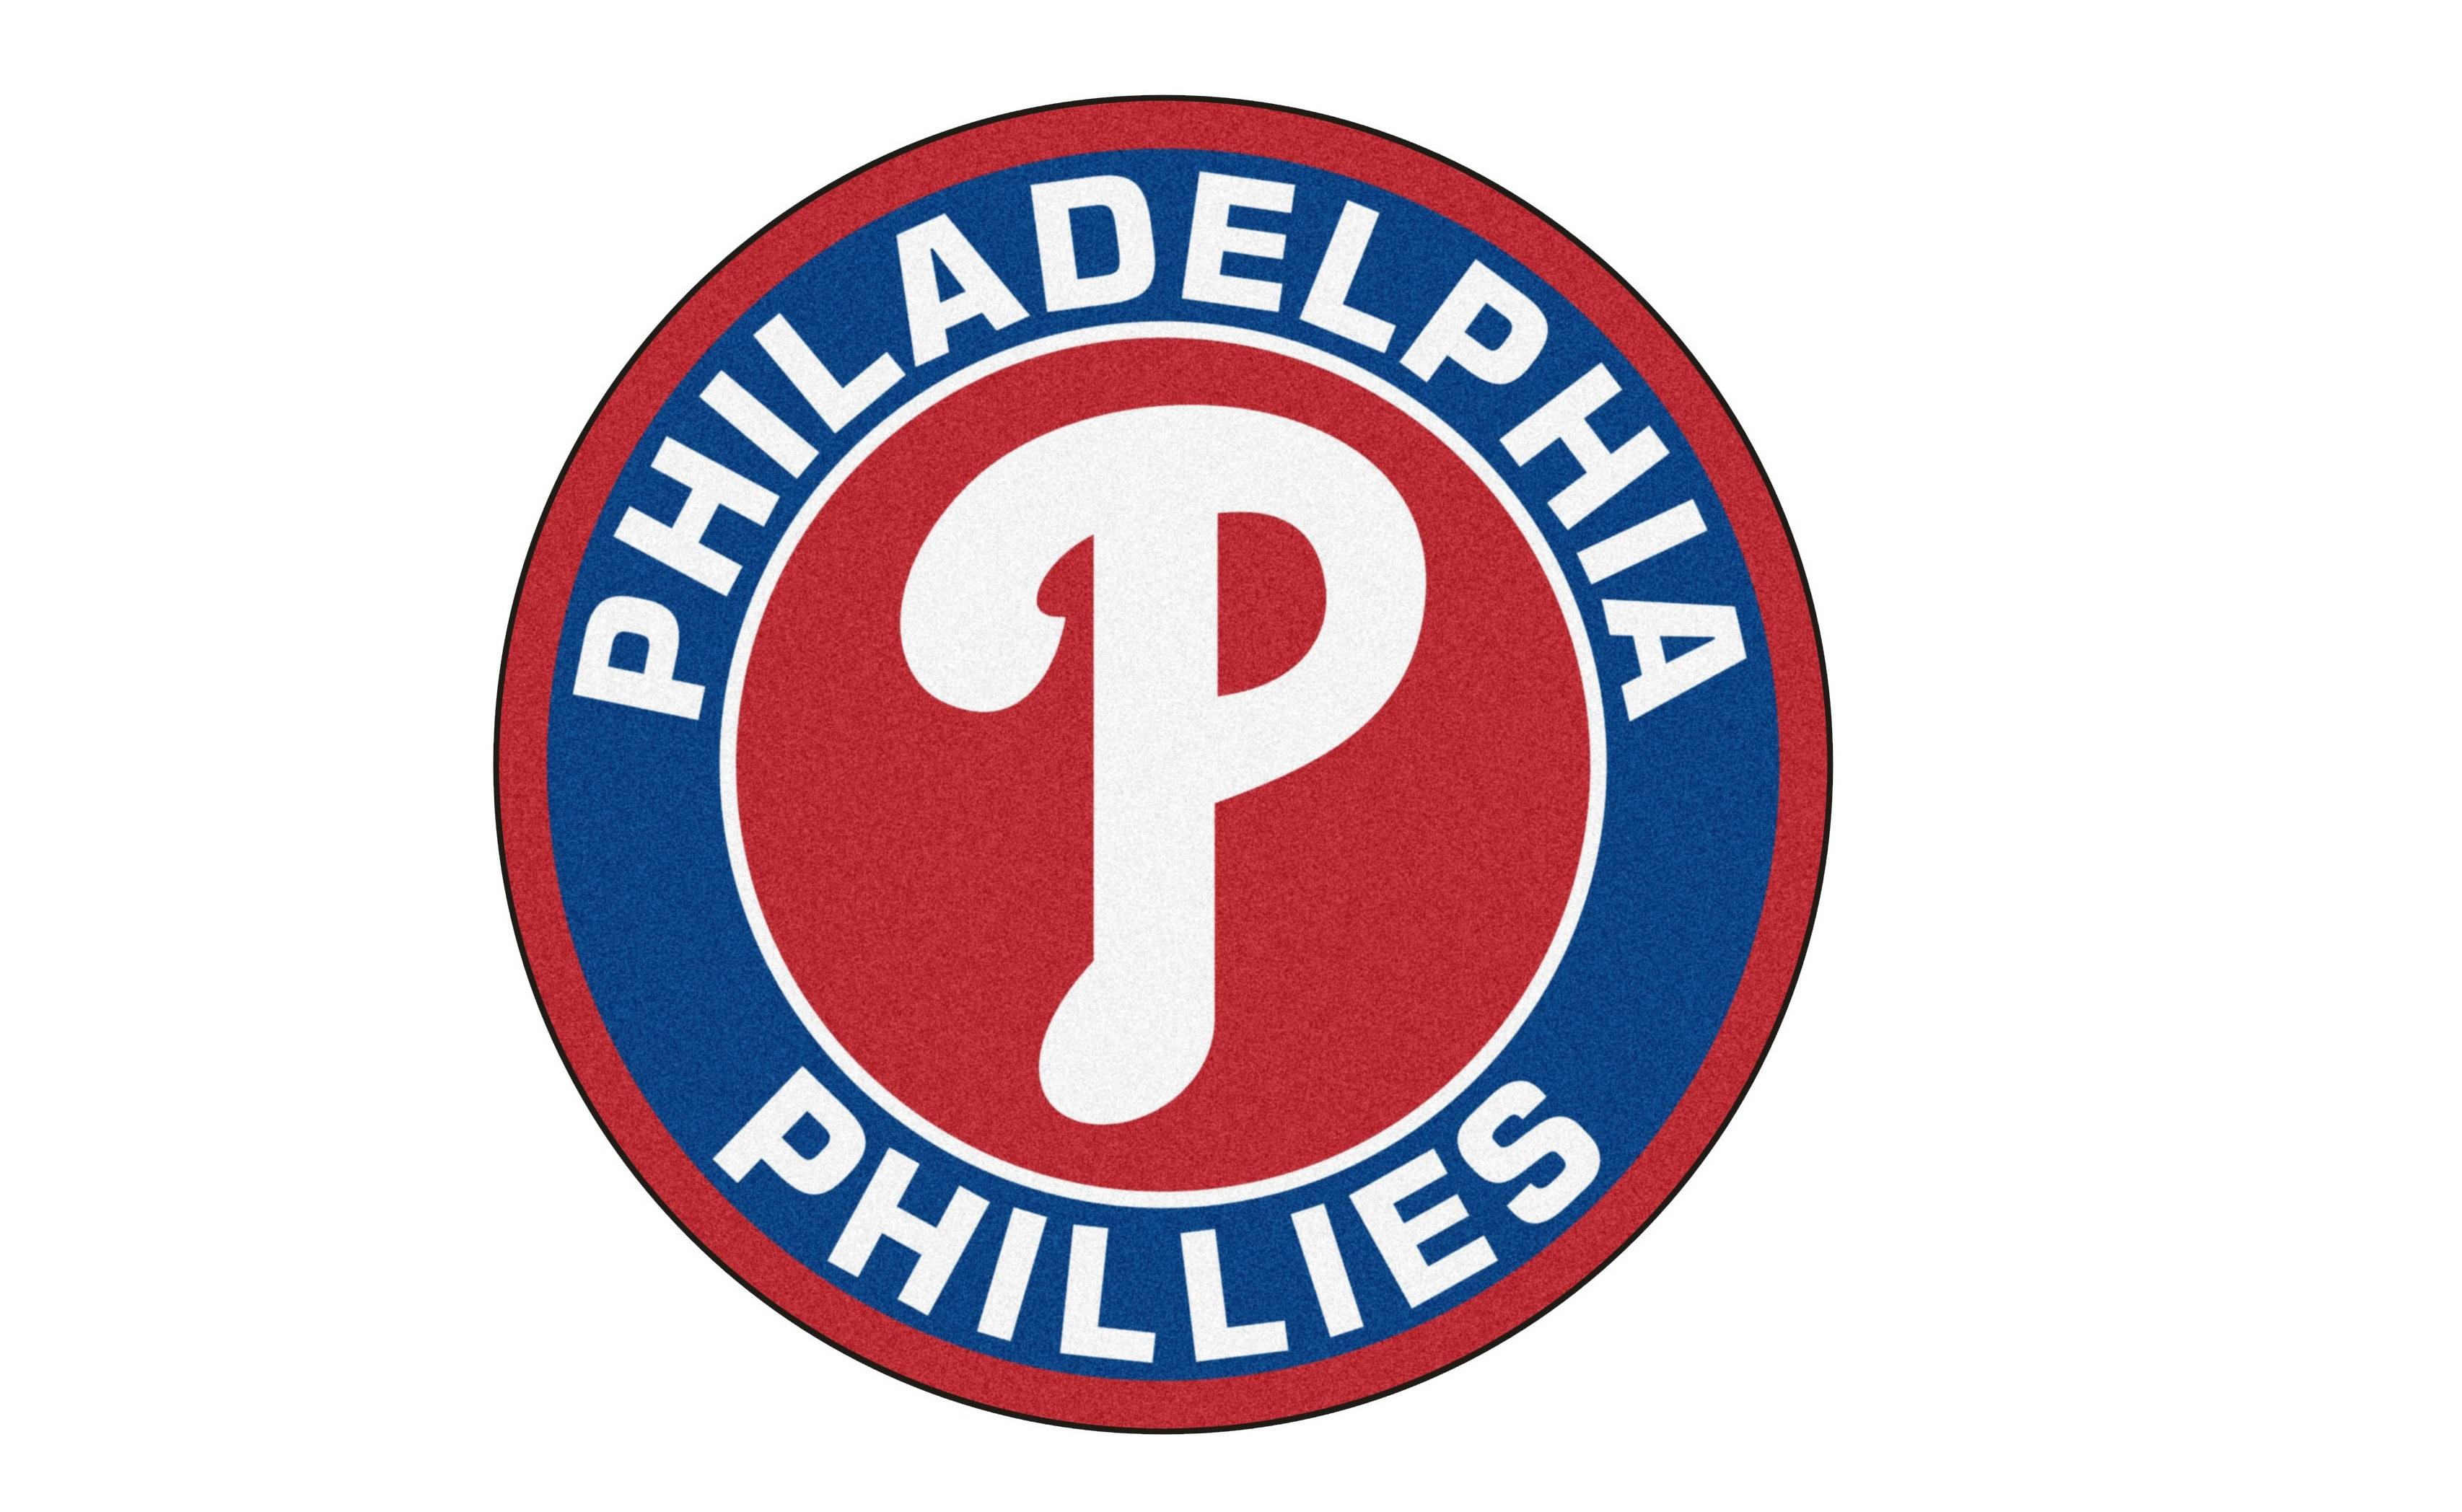 Philadelphia Phillies Wallpaper Image Photo Picture